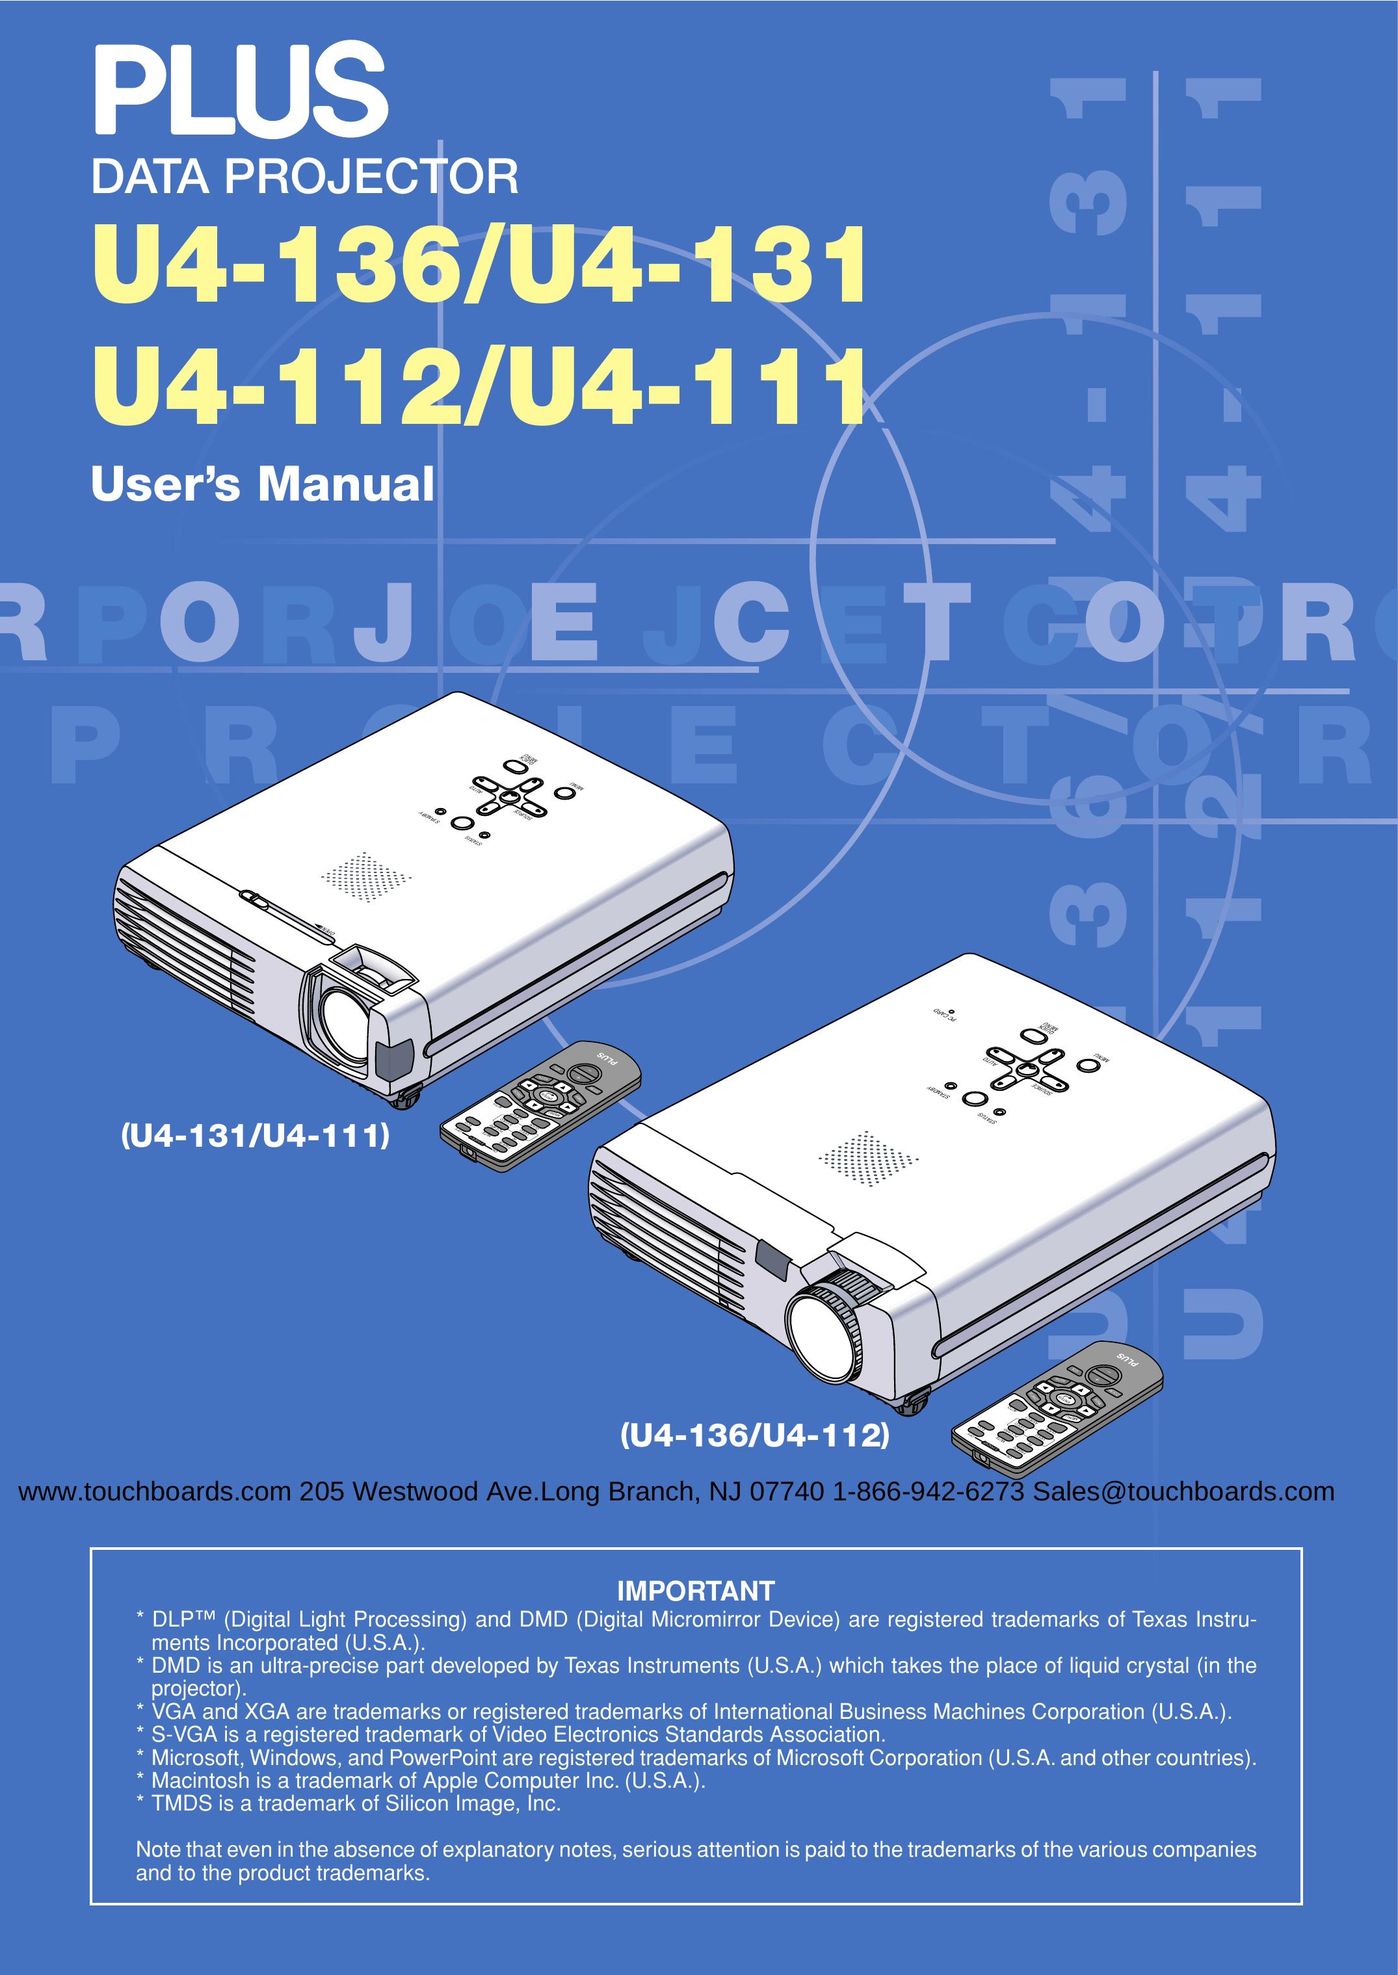 PLUS Vision U4-112 Projector User Manual